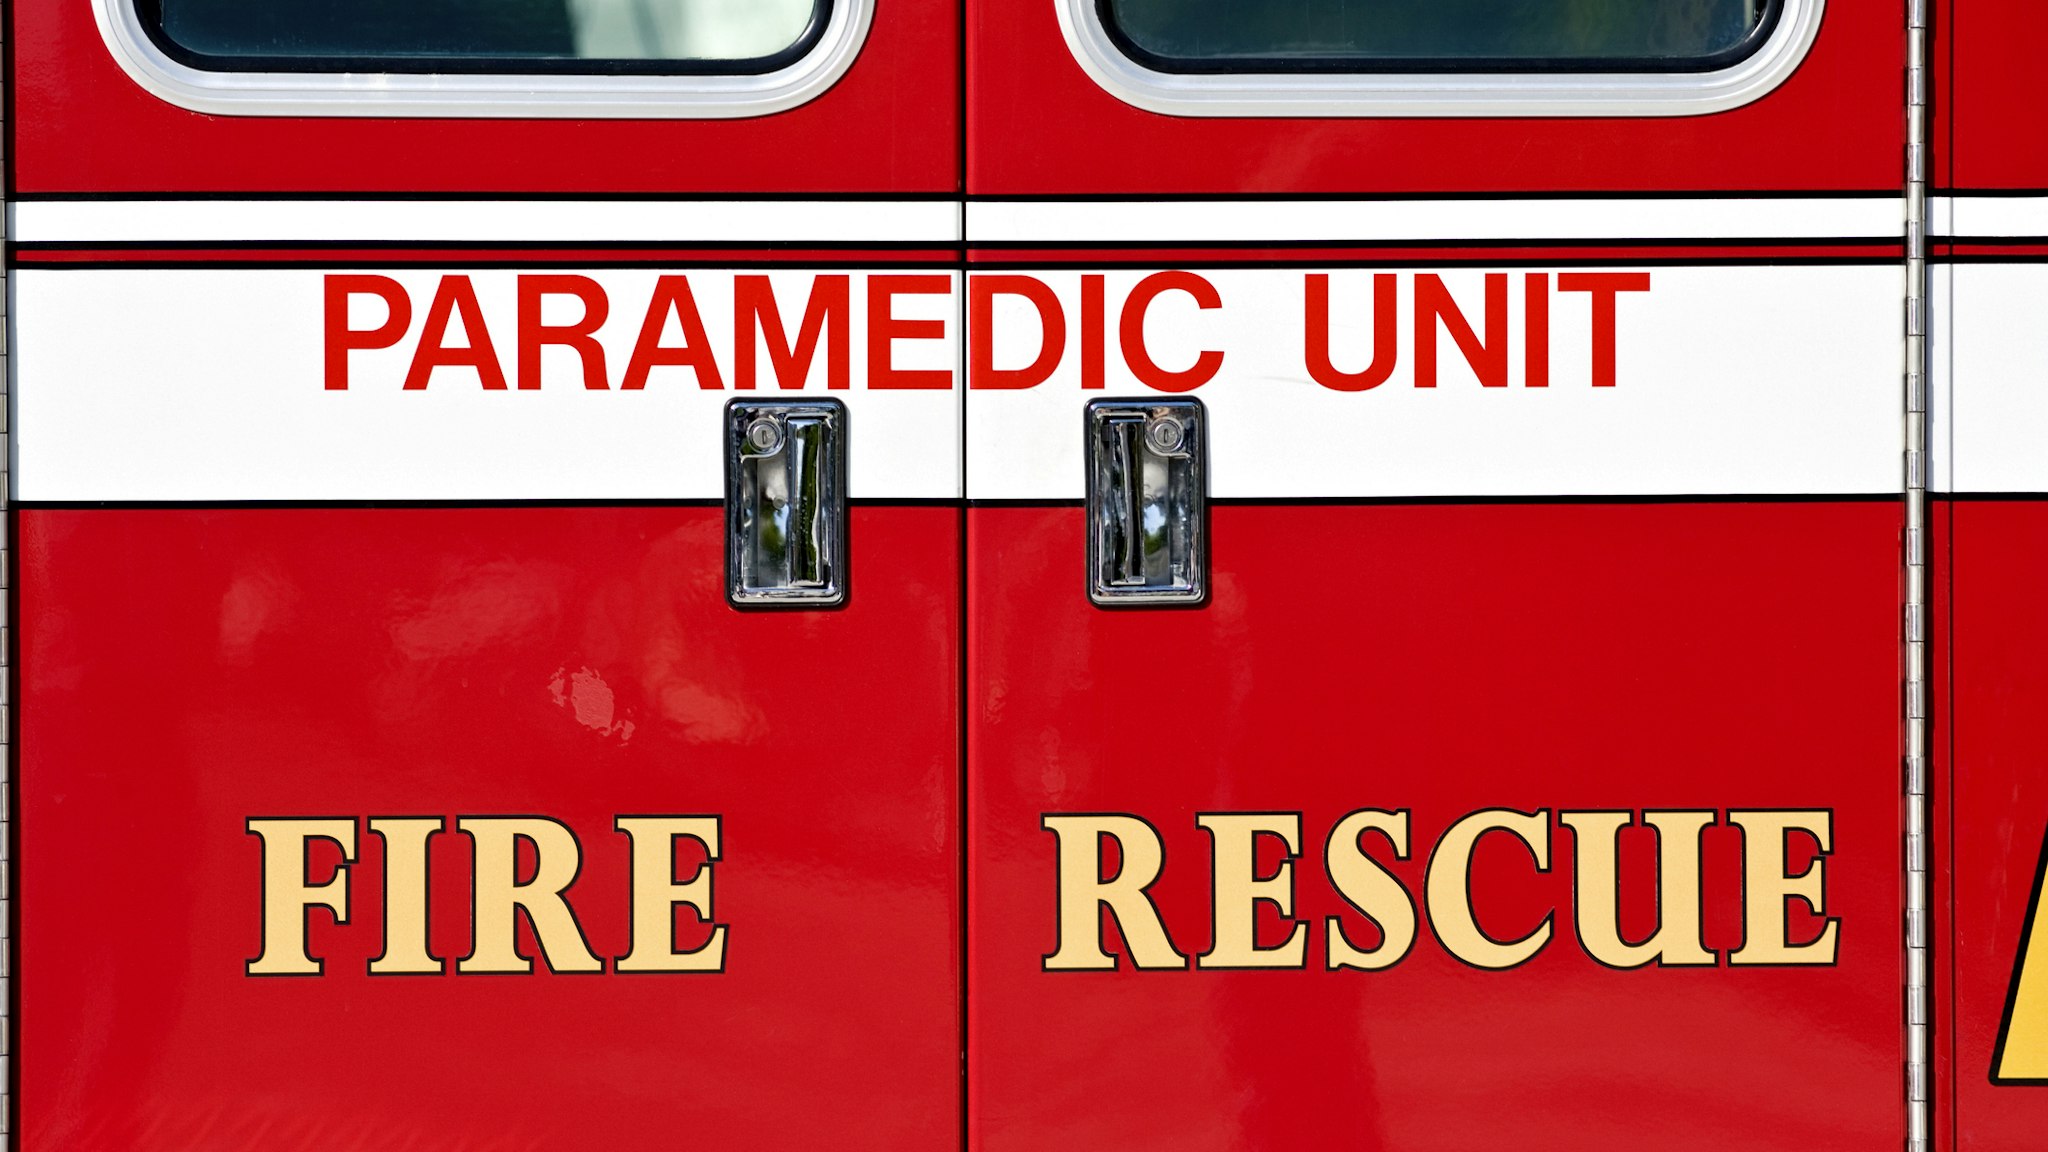 Fire-rescue ambulance